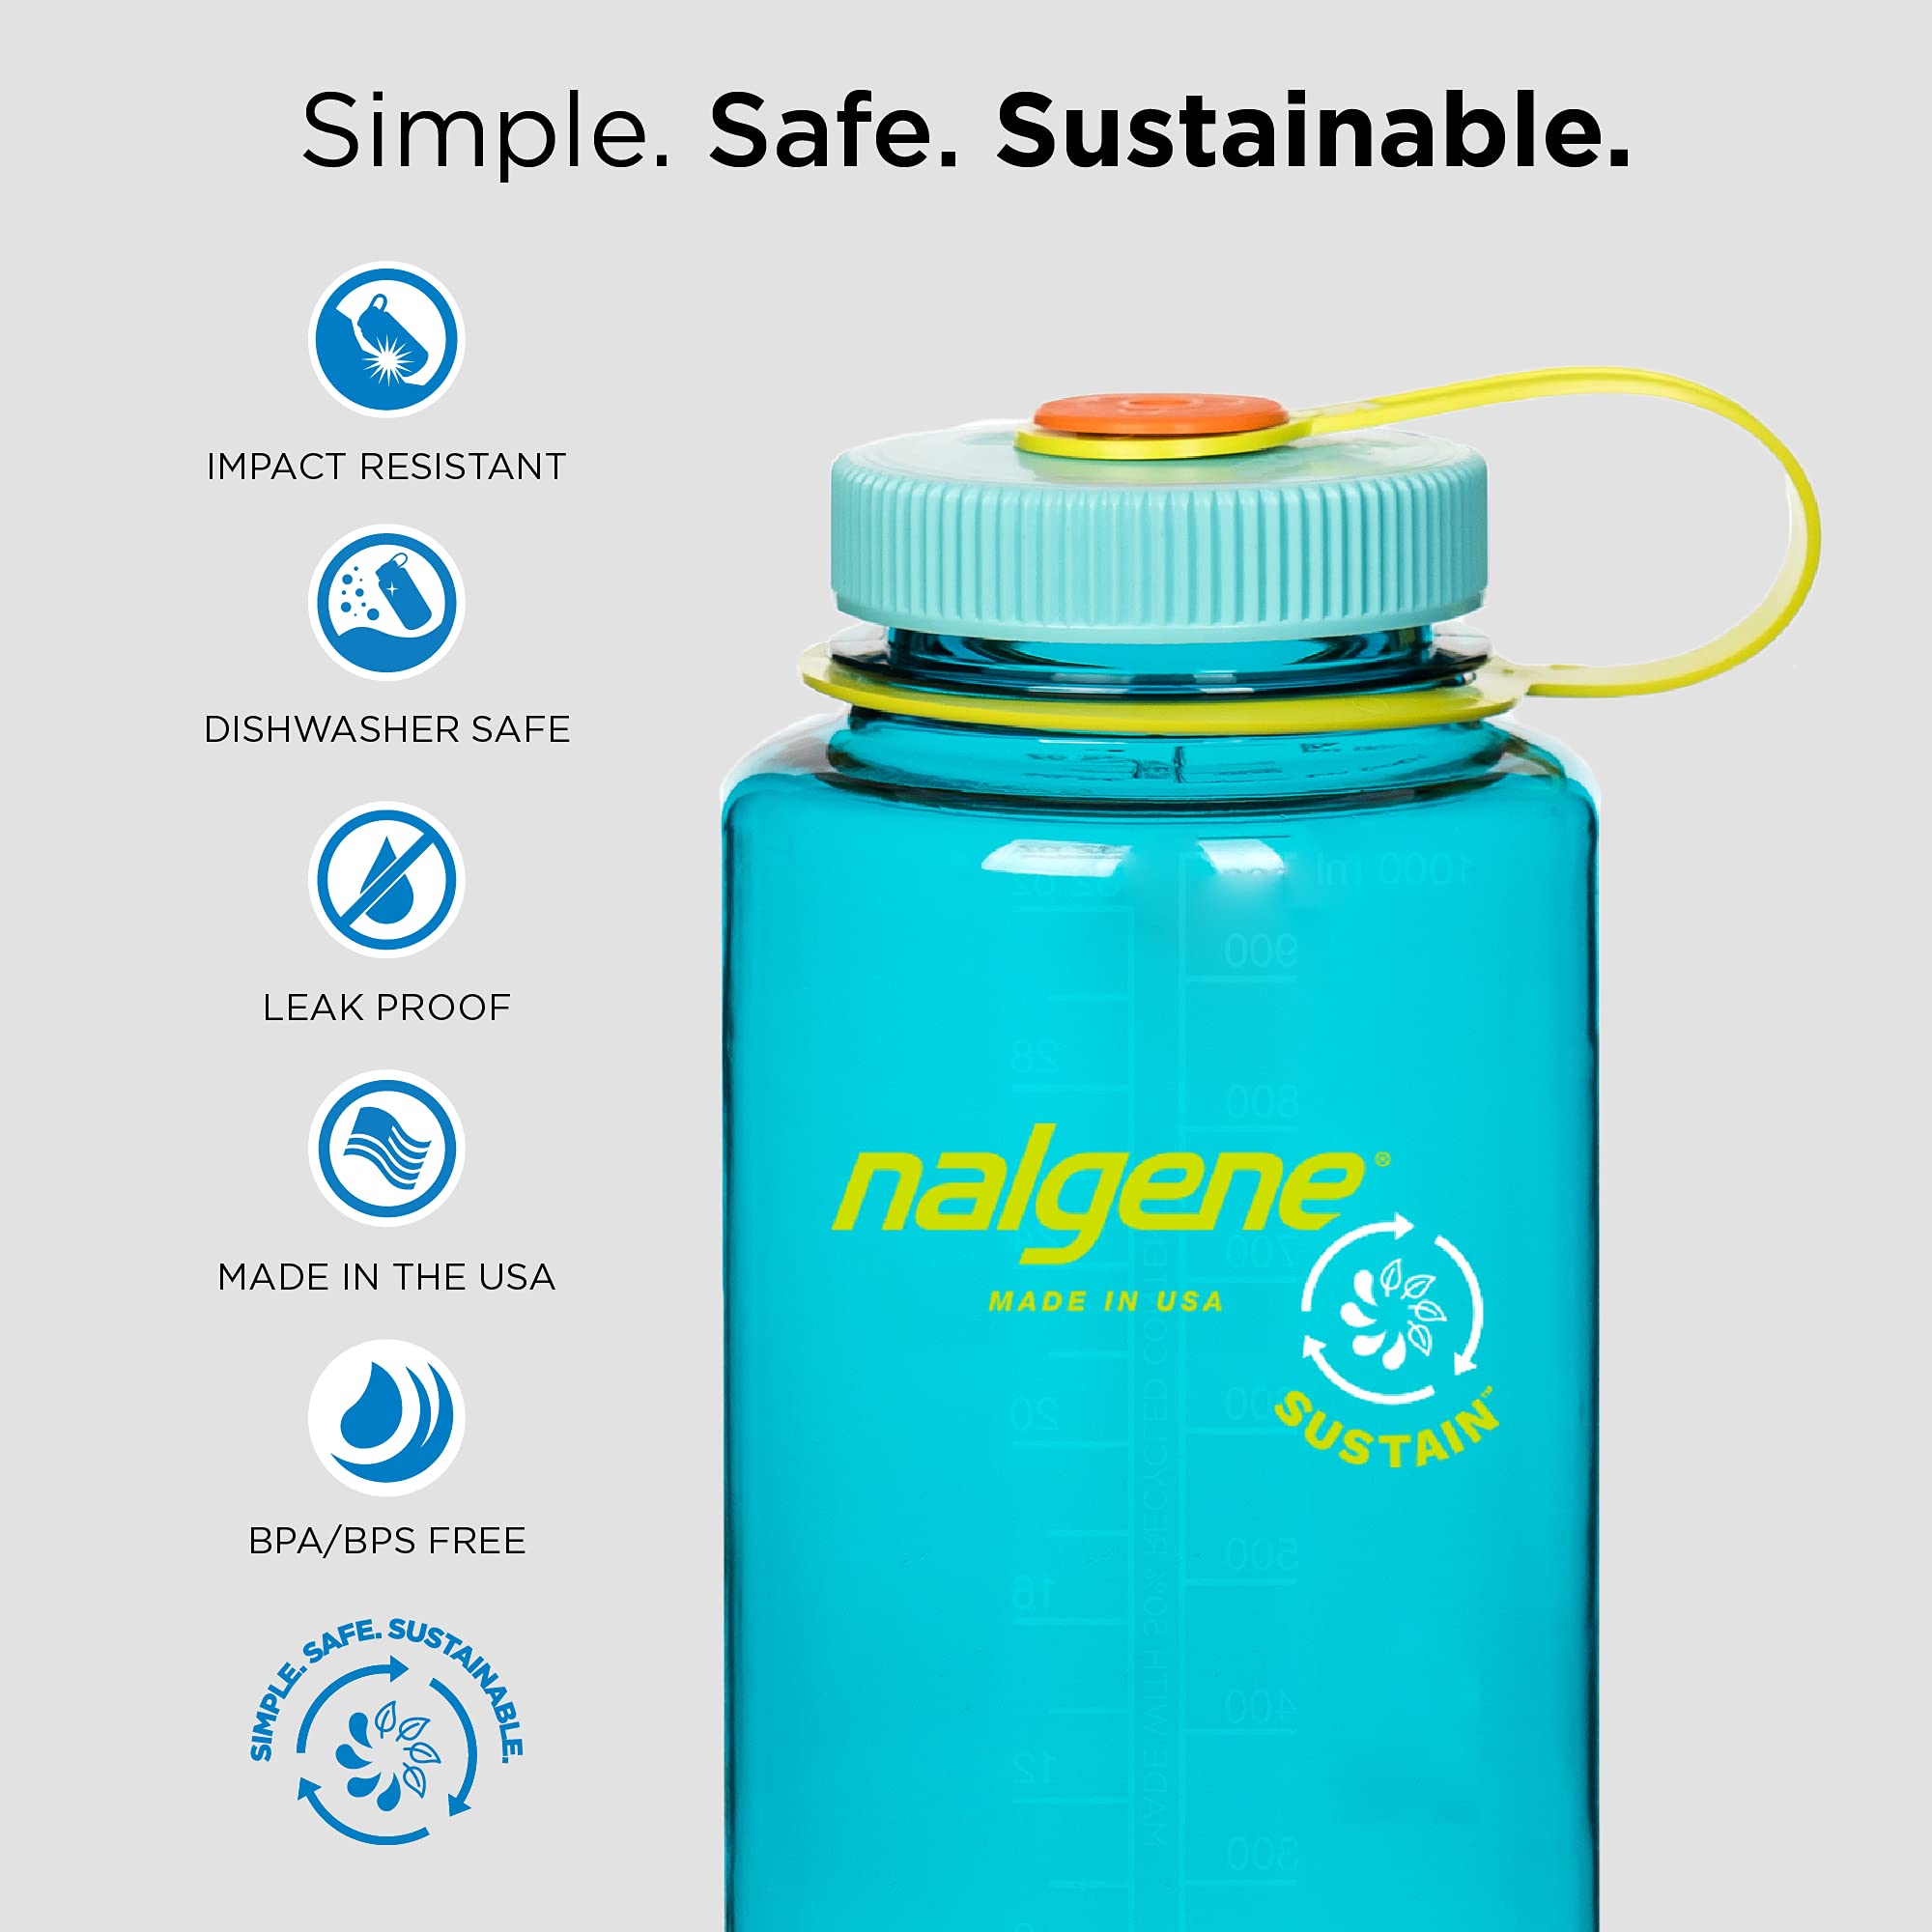 Nalgene Tritan Wide Mouth BPA-Free Water Bottle, Pomegranate, 32 oz